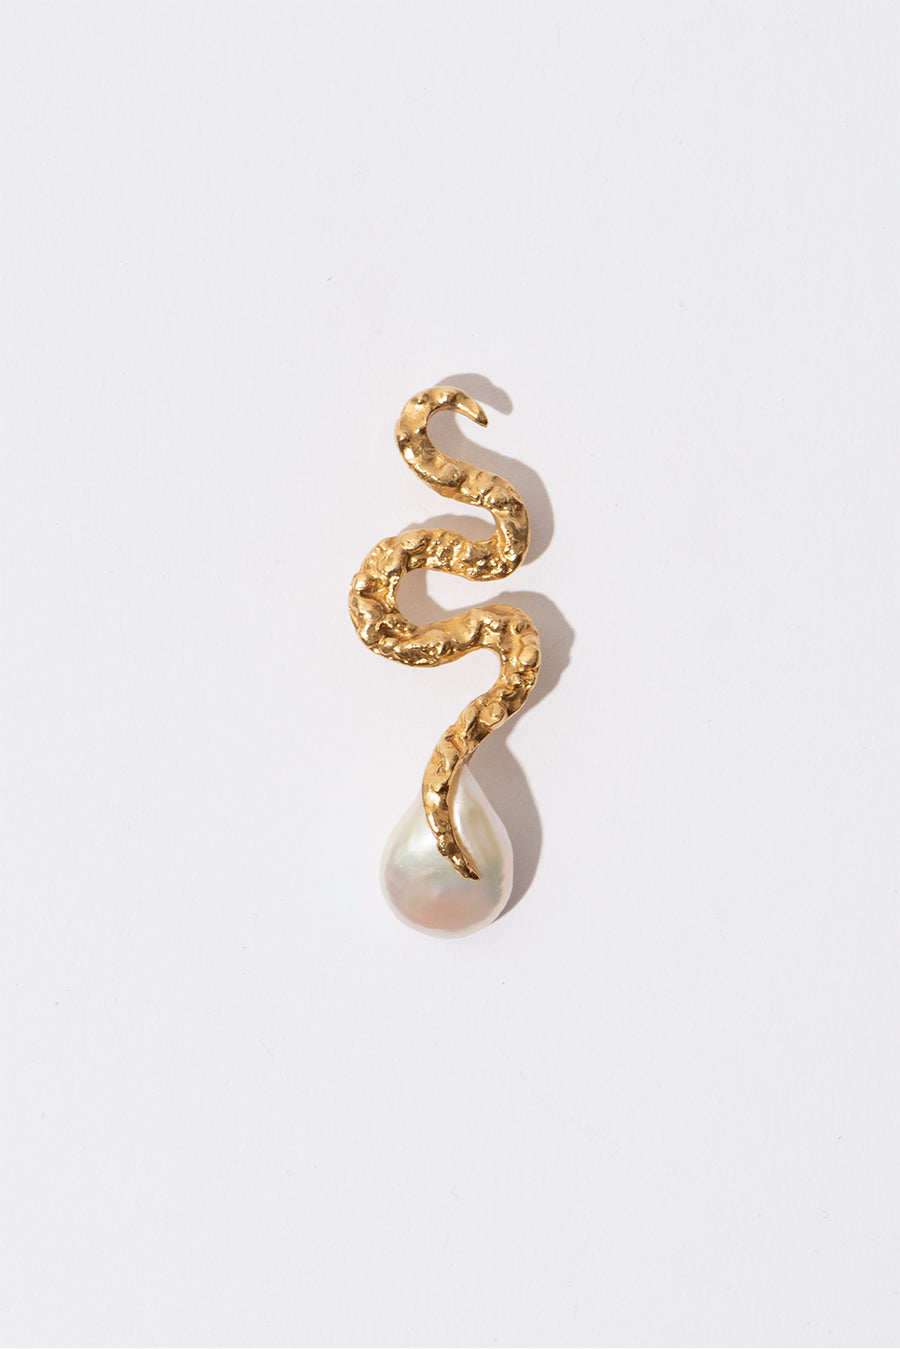 The Snake Pearl Earring